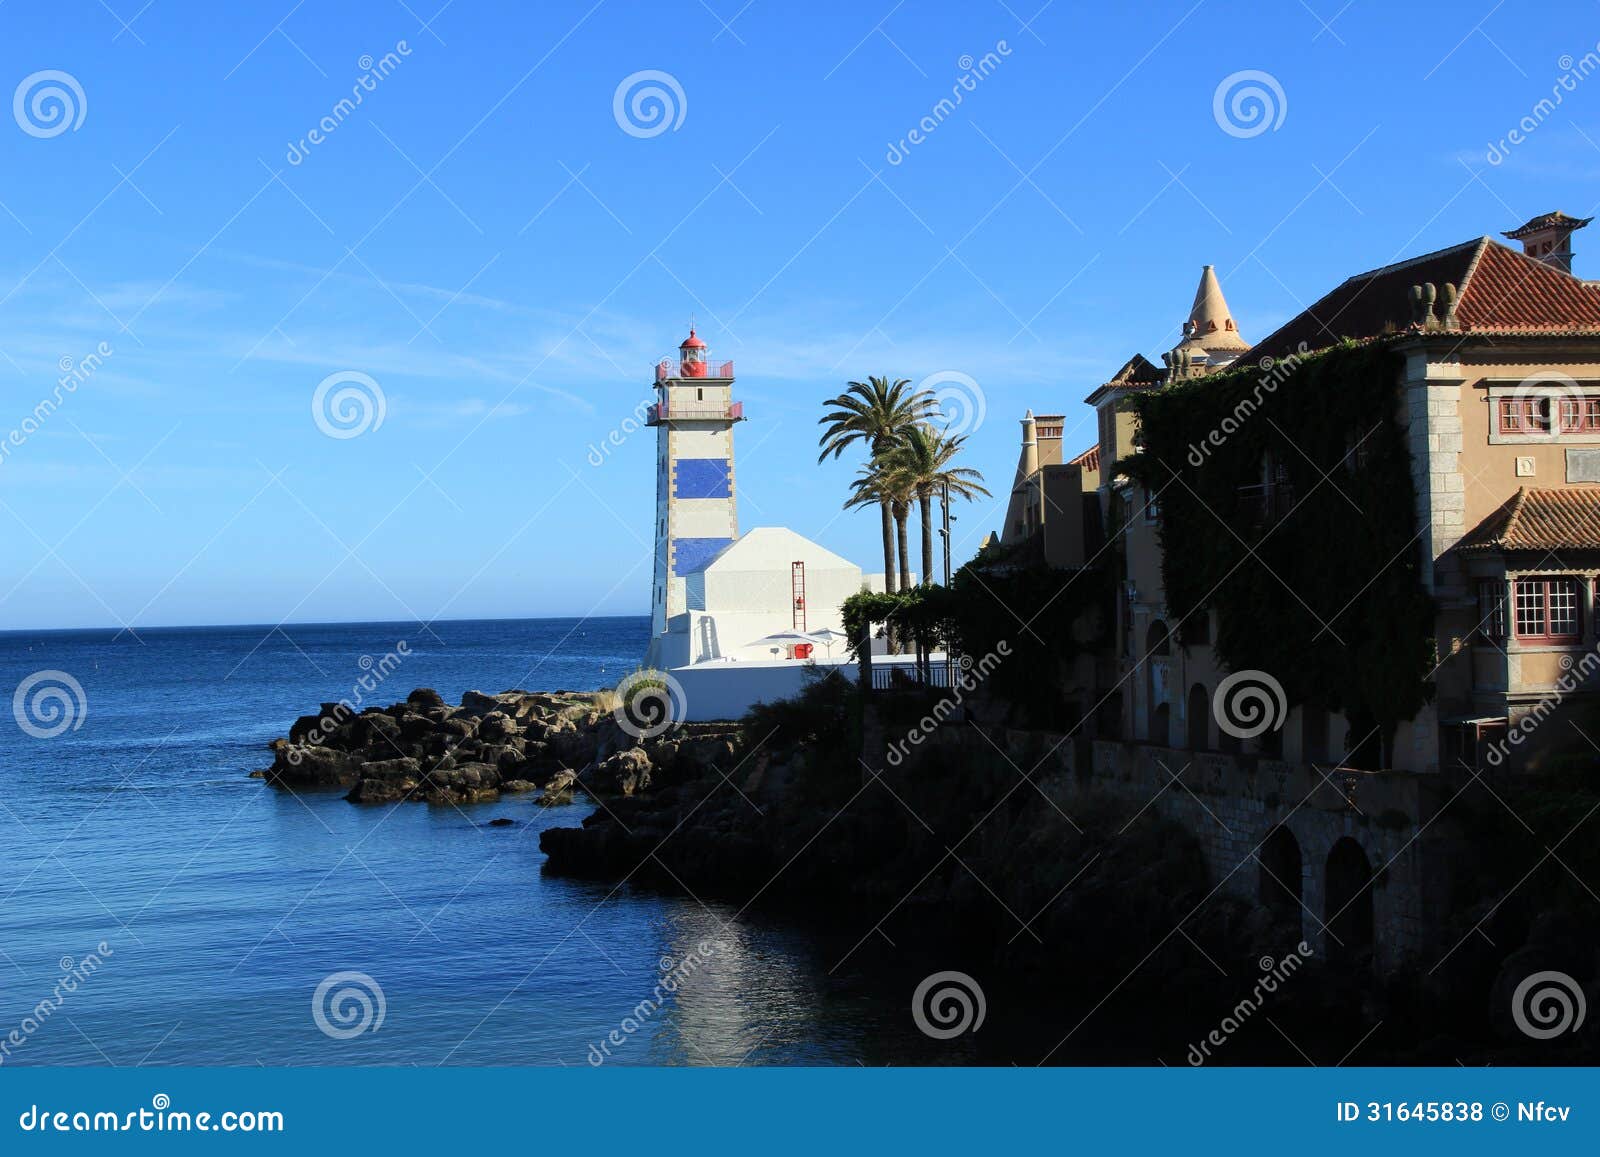 santa marta lighthouse and museum